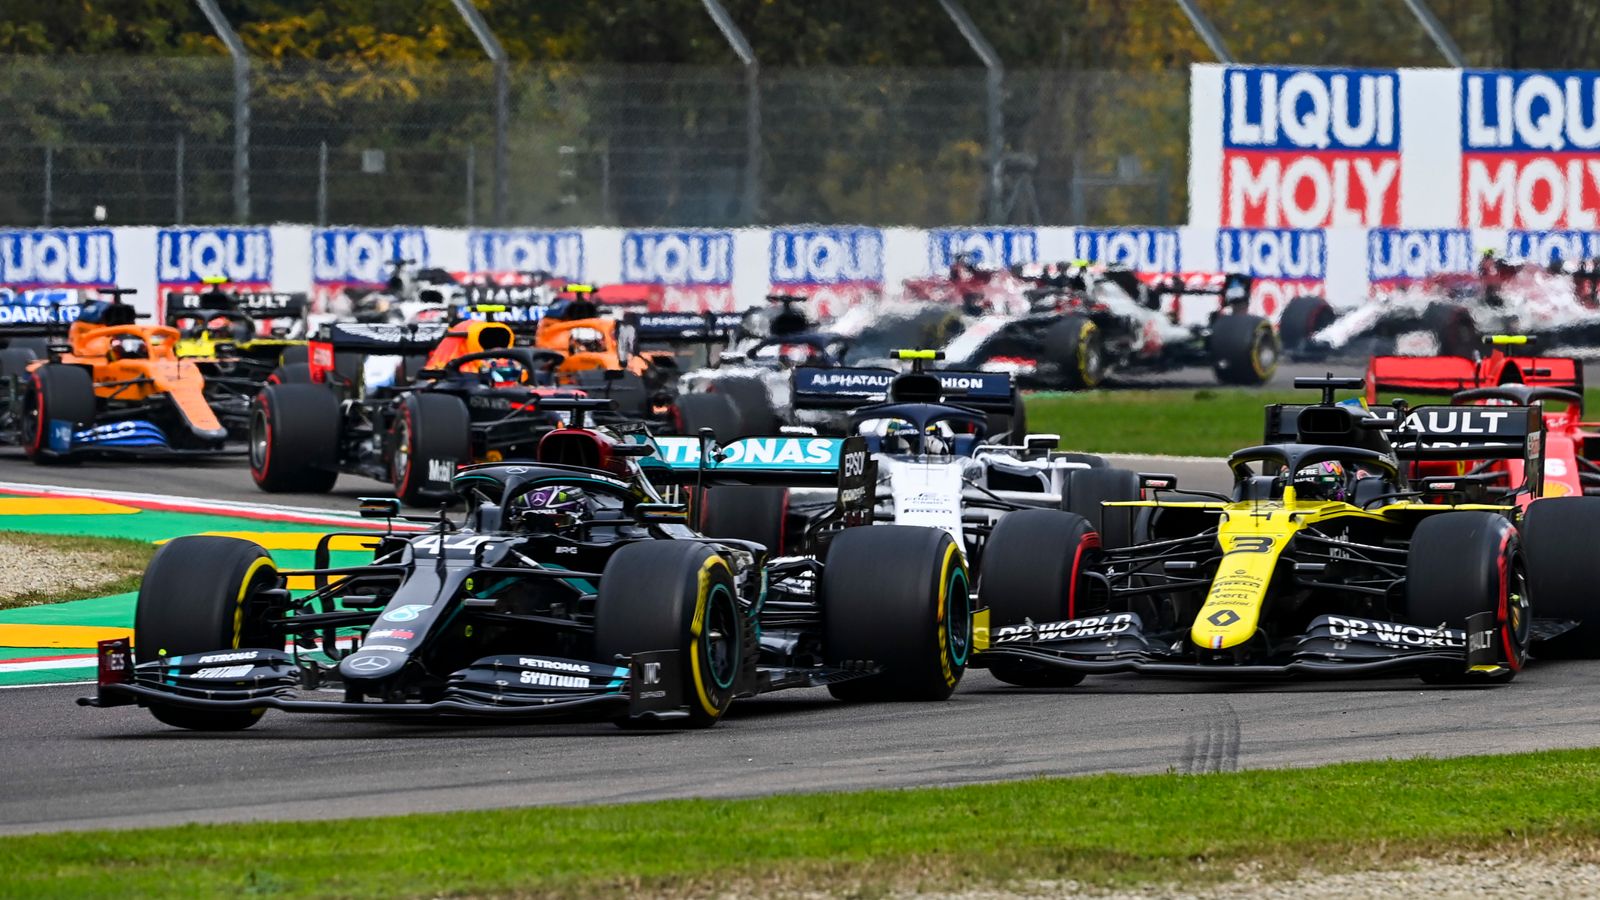 Formule 1 2 Augustus 2021 F1 Calendar 2021 Season To Start With Bahrain And Imola As Australia And China Races Postponed F1 News